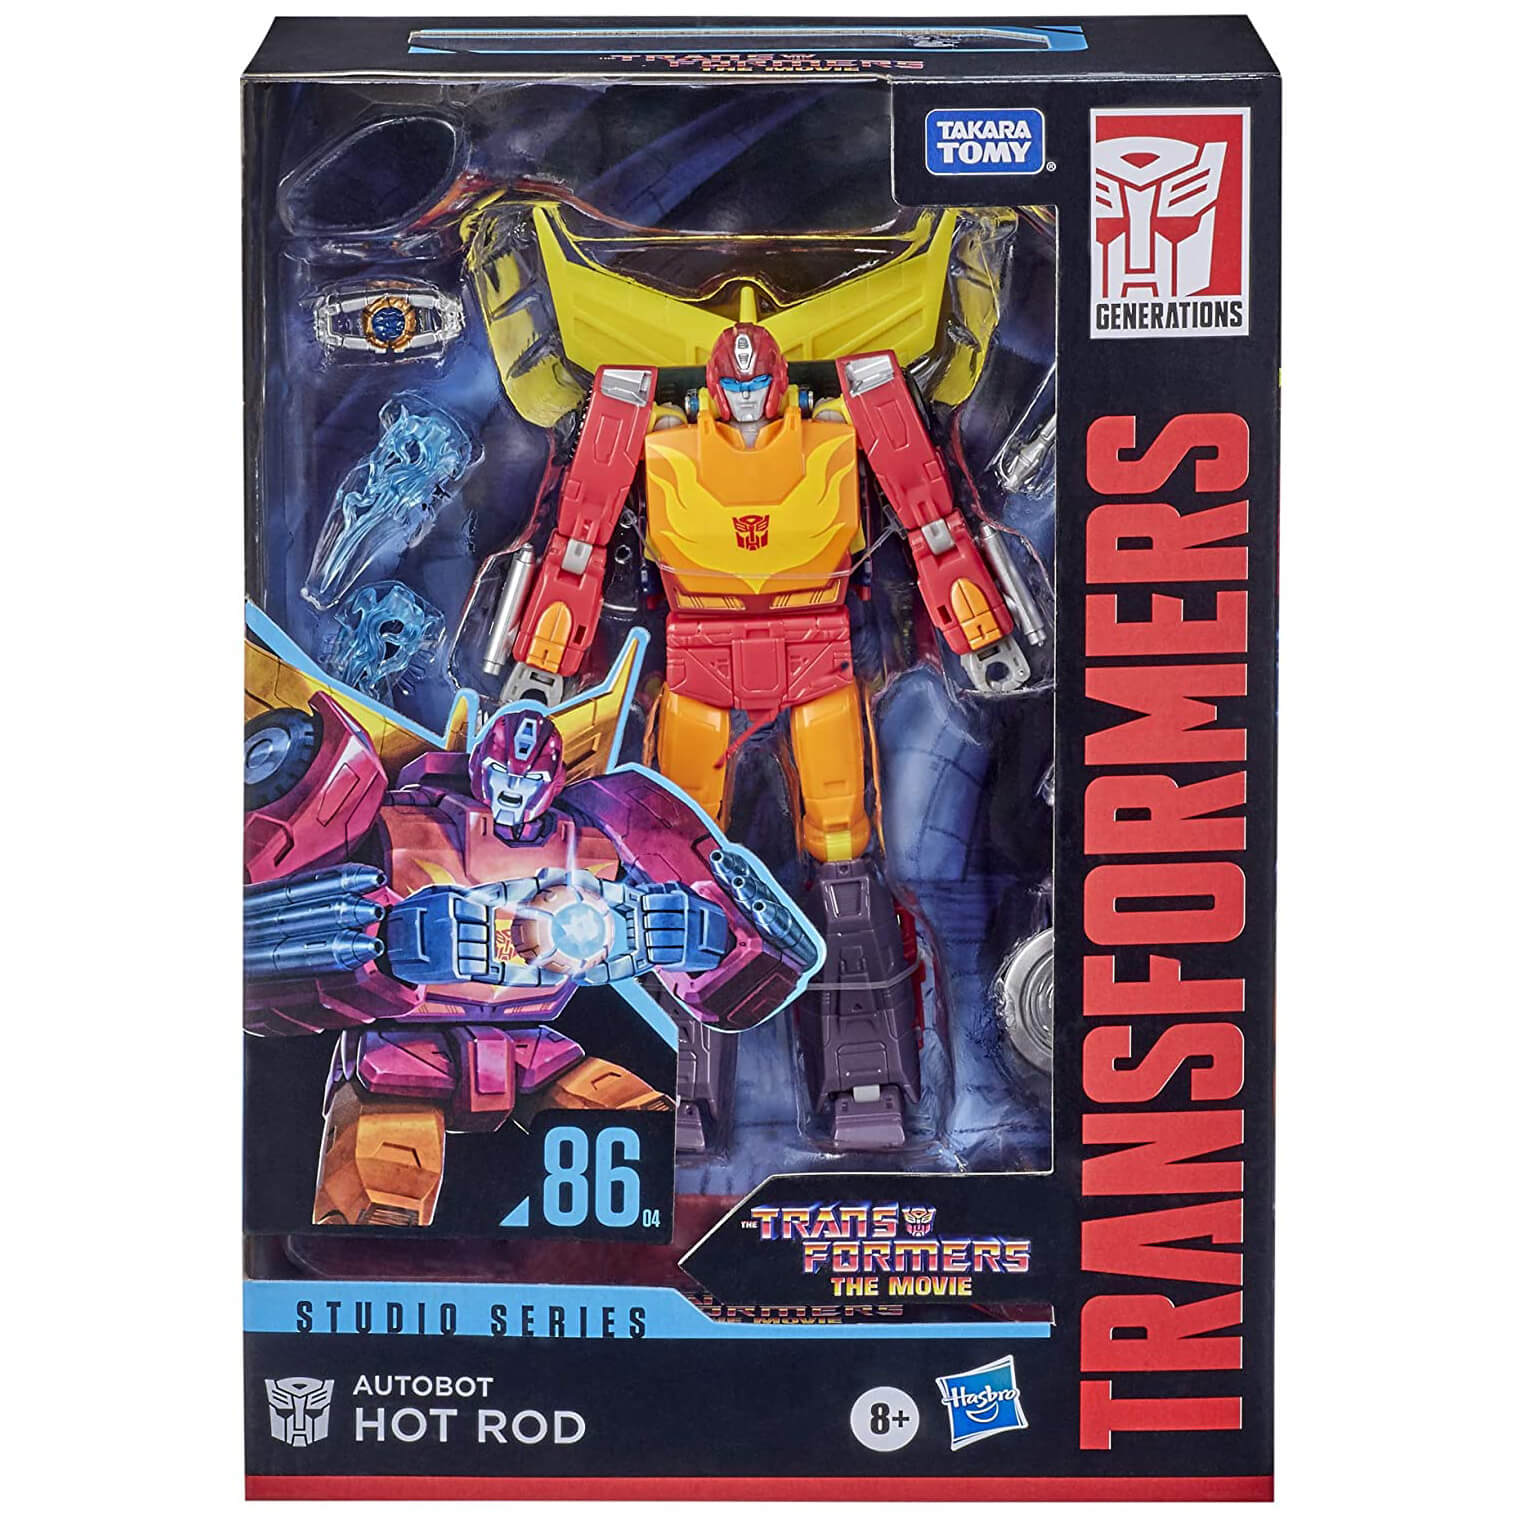 Transformers Studio Series Hot Rod Voyager Class Figure #86